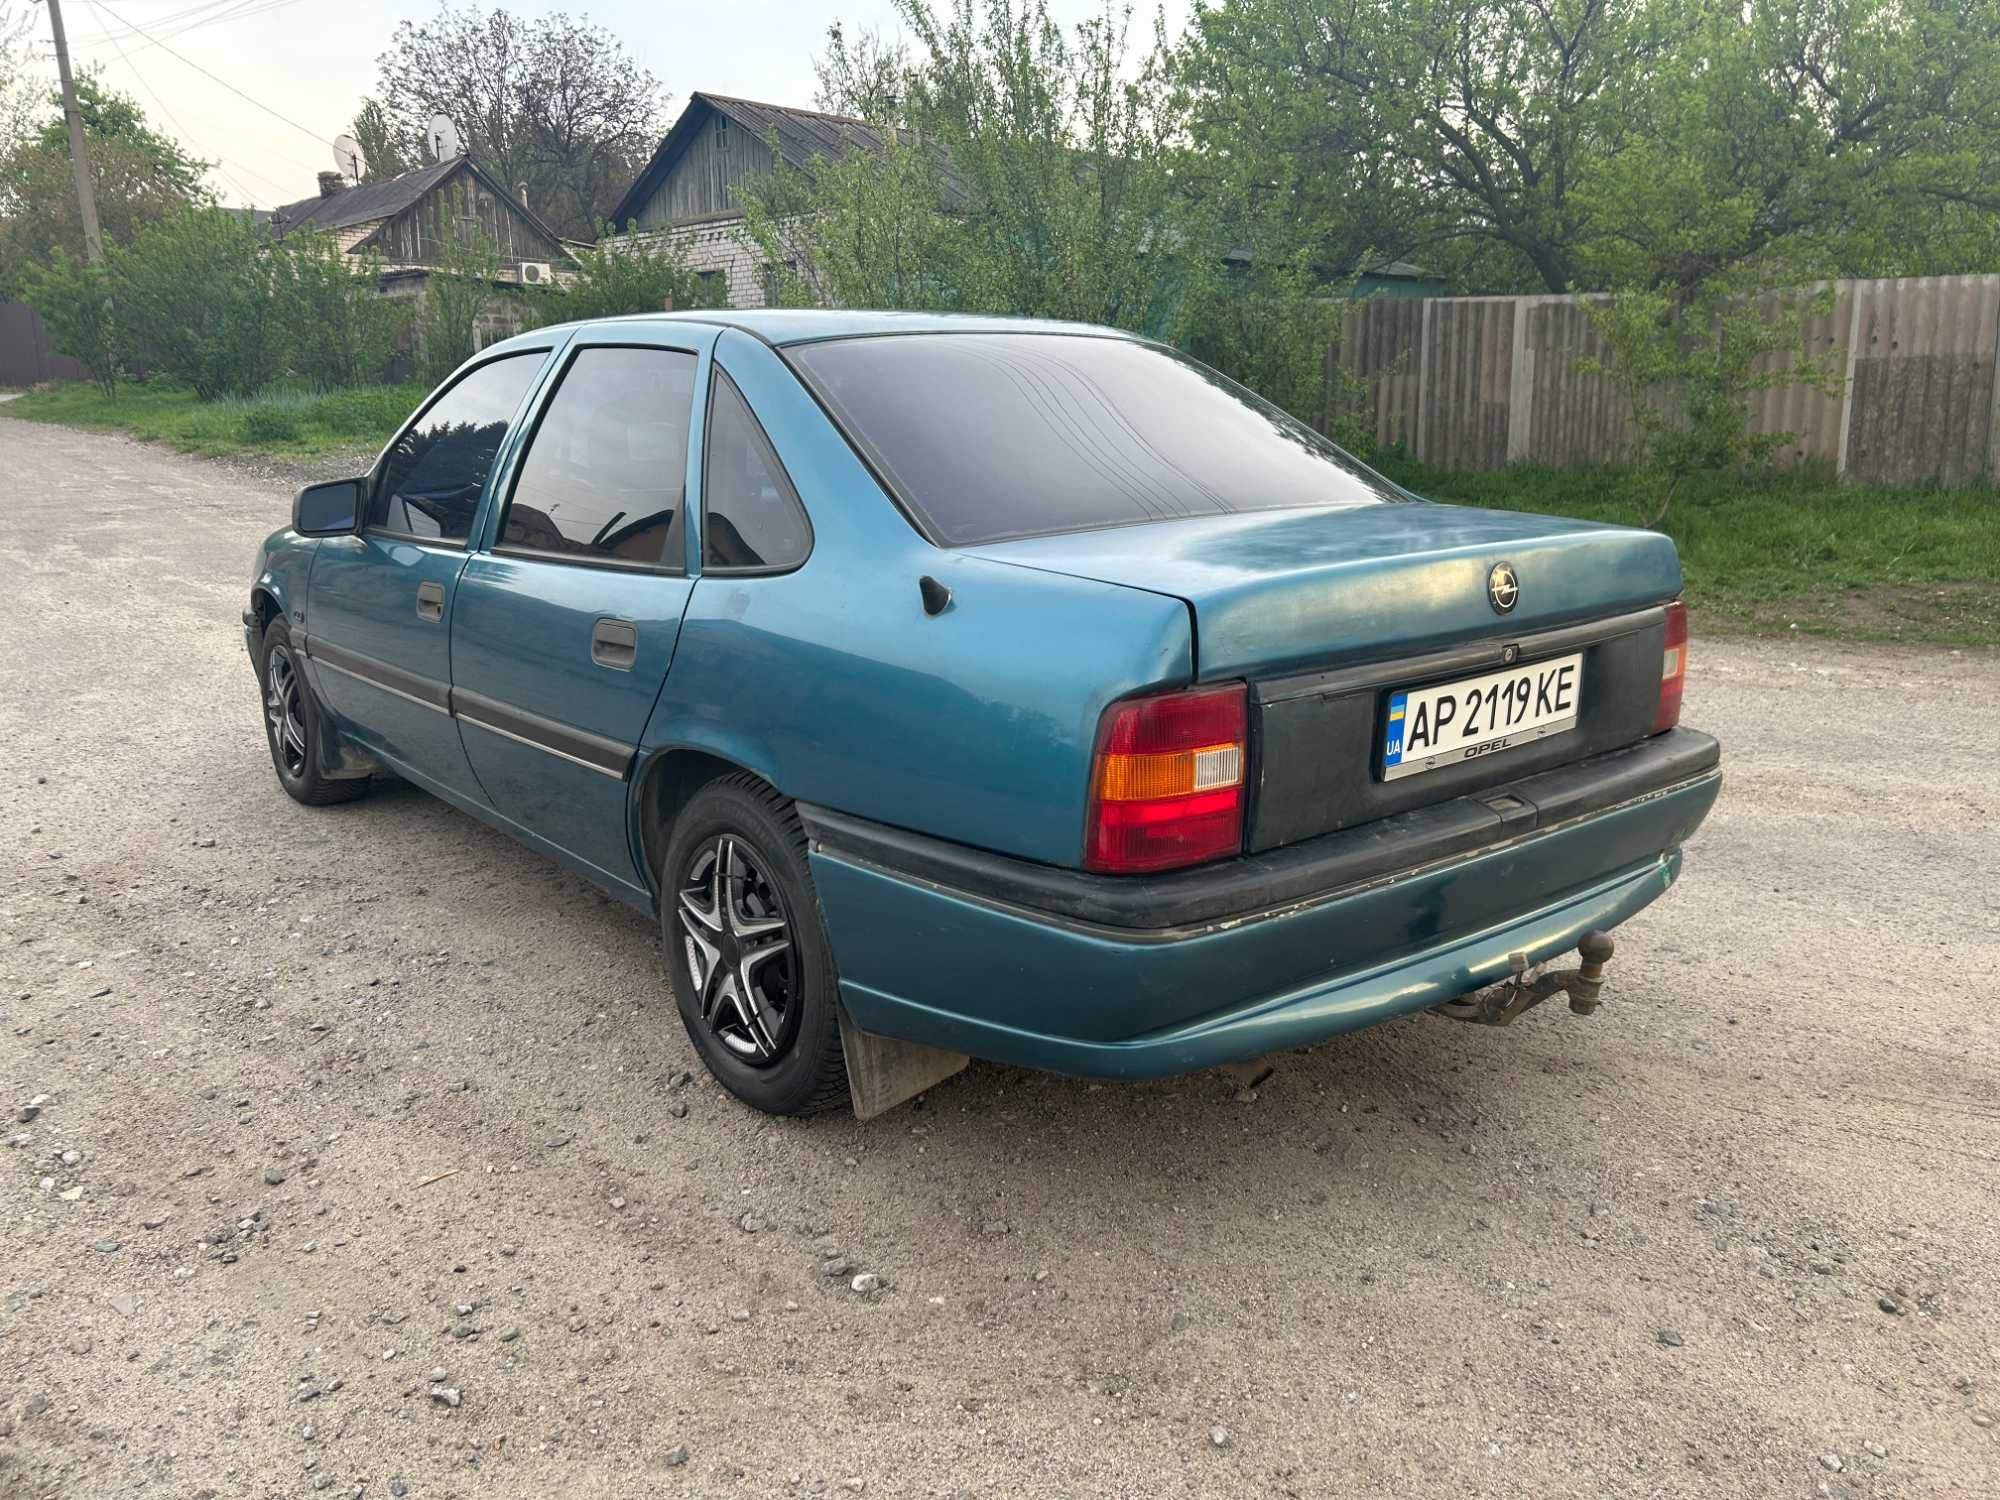 Opel Vectra A 1993 год 2.0 Газ Бензин (ГБО 4 поколение)